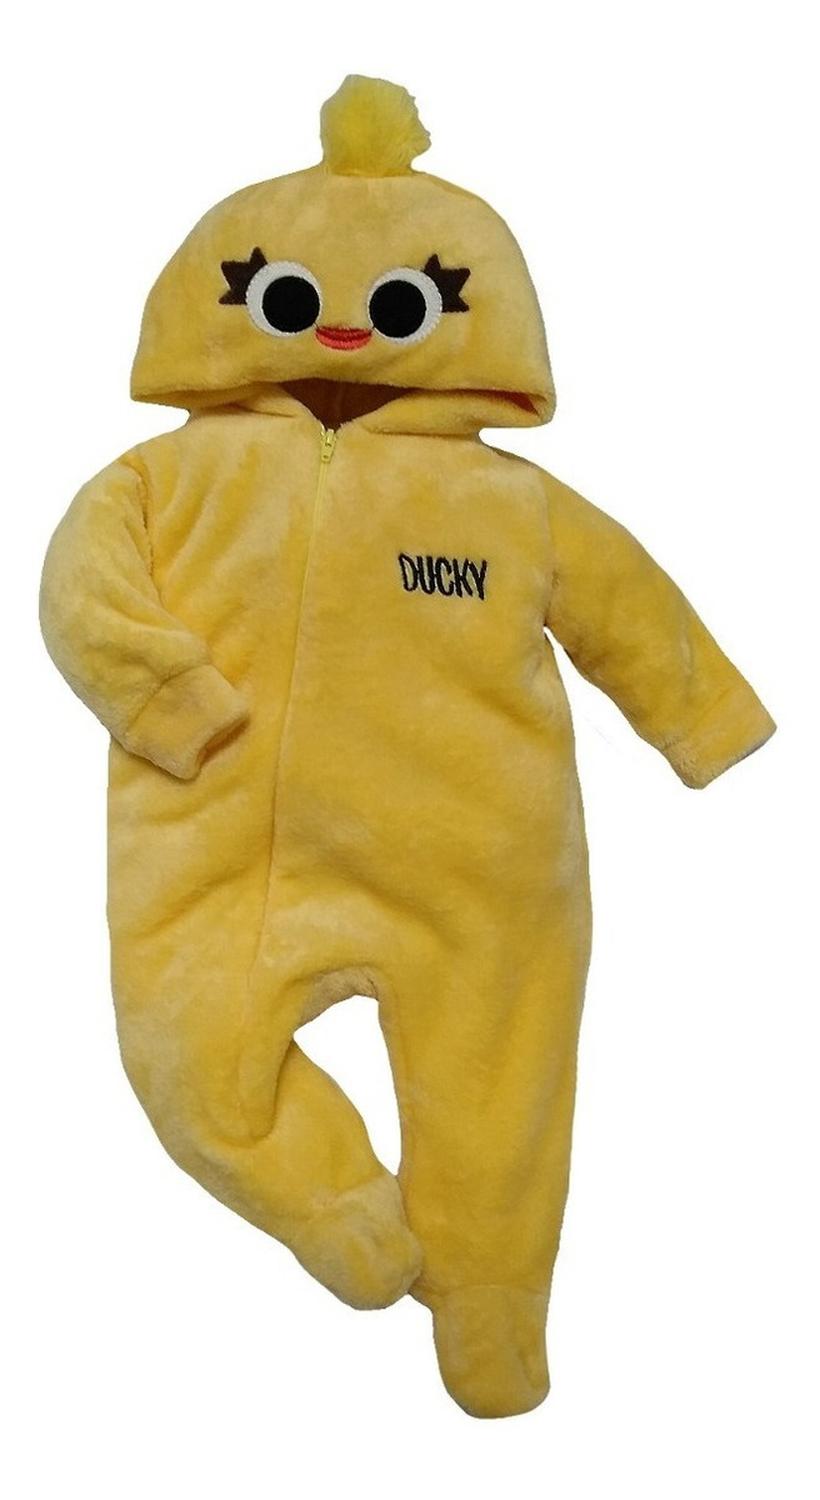 Kit 4 Mamelucos Disney para Bebé con Gorro Bordado Toy Story Ducky, Hamm, Rex, Woody